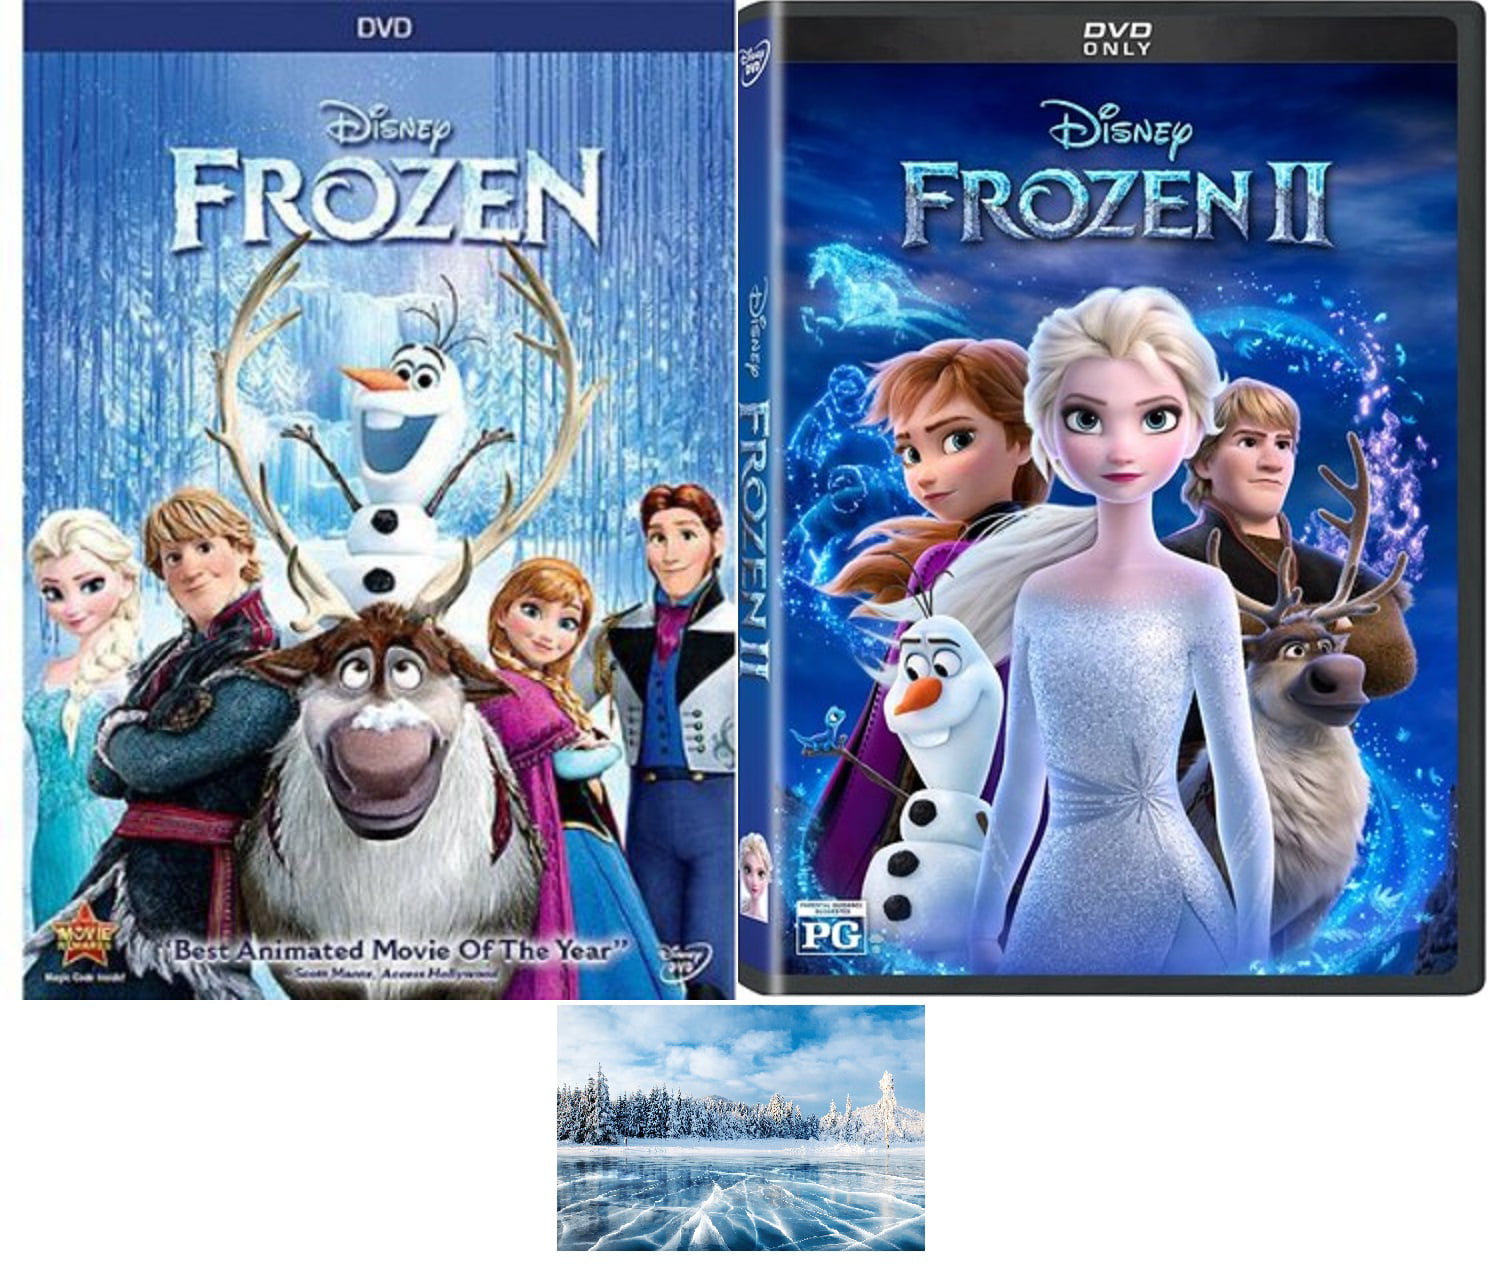 Hijgend onderpand Induceren Disney's Frozen DVD Double Feature One 1 & Two 2 Includes Frozen Glossy  Print Art Card - Walmart.com